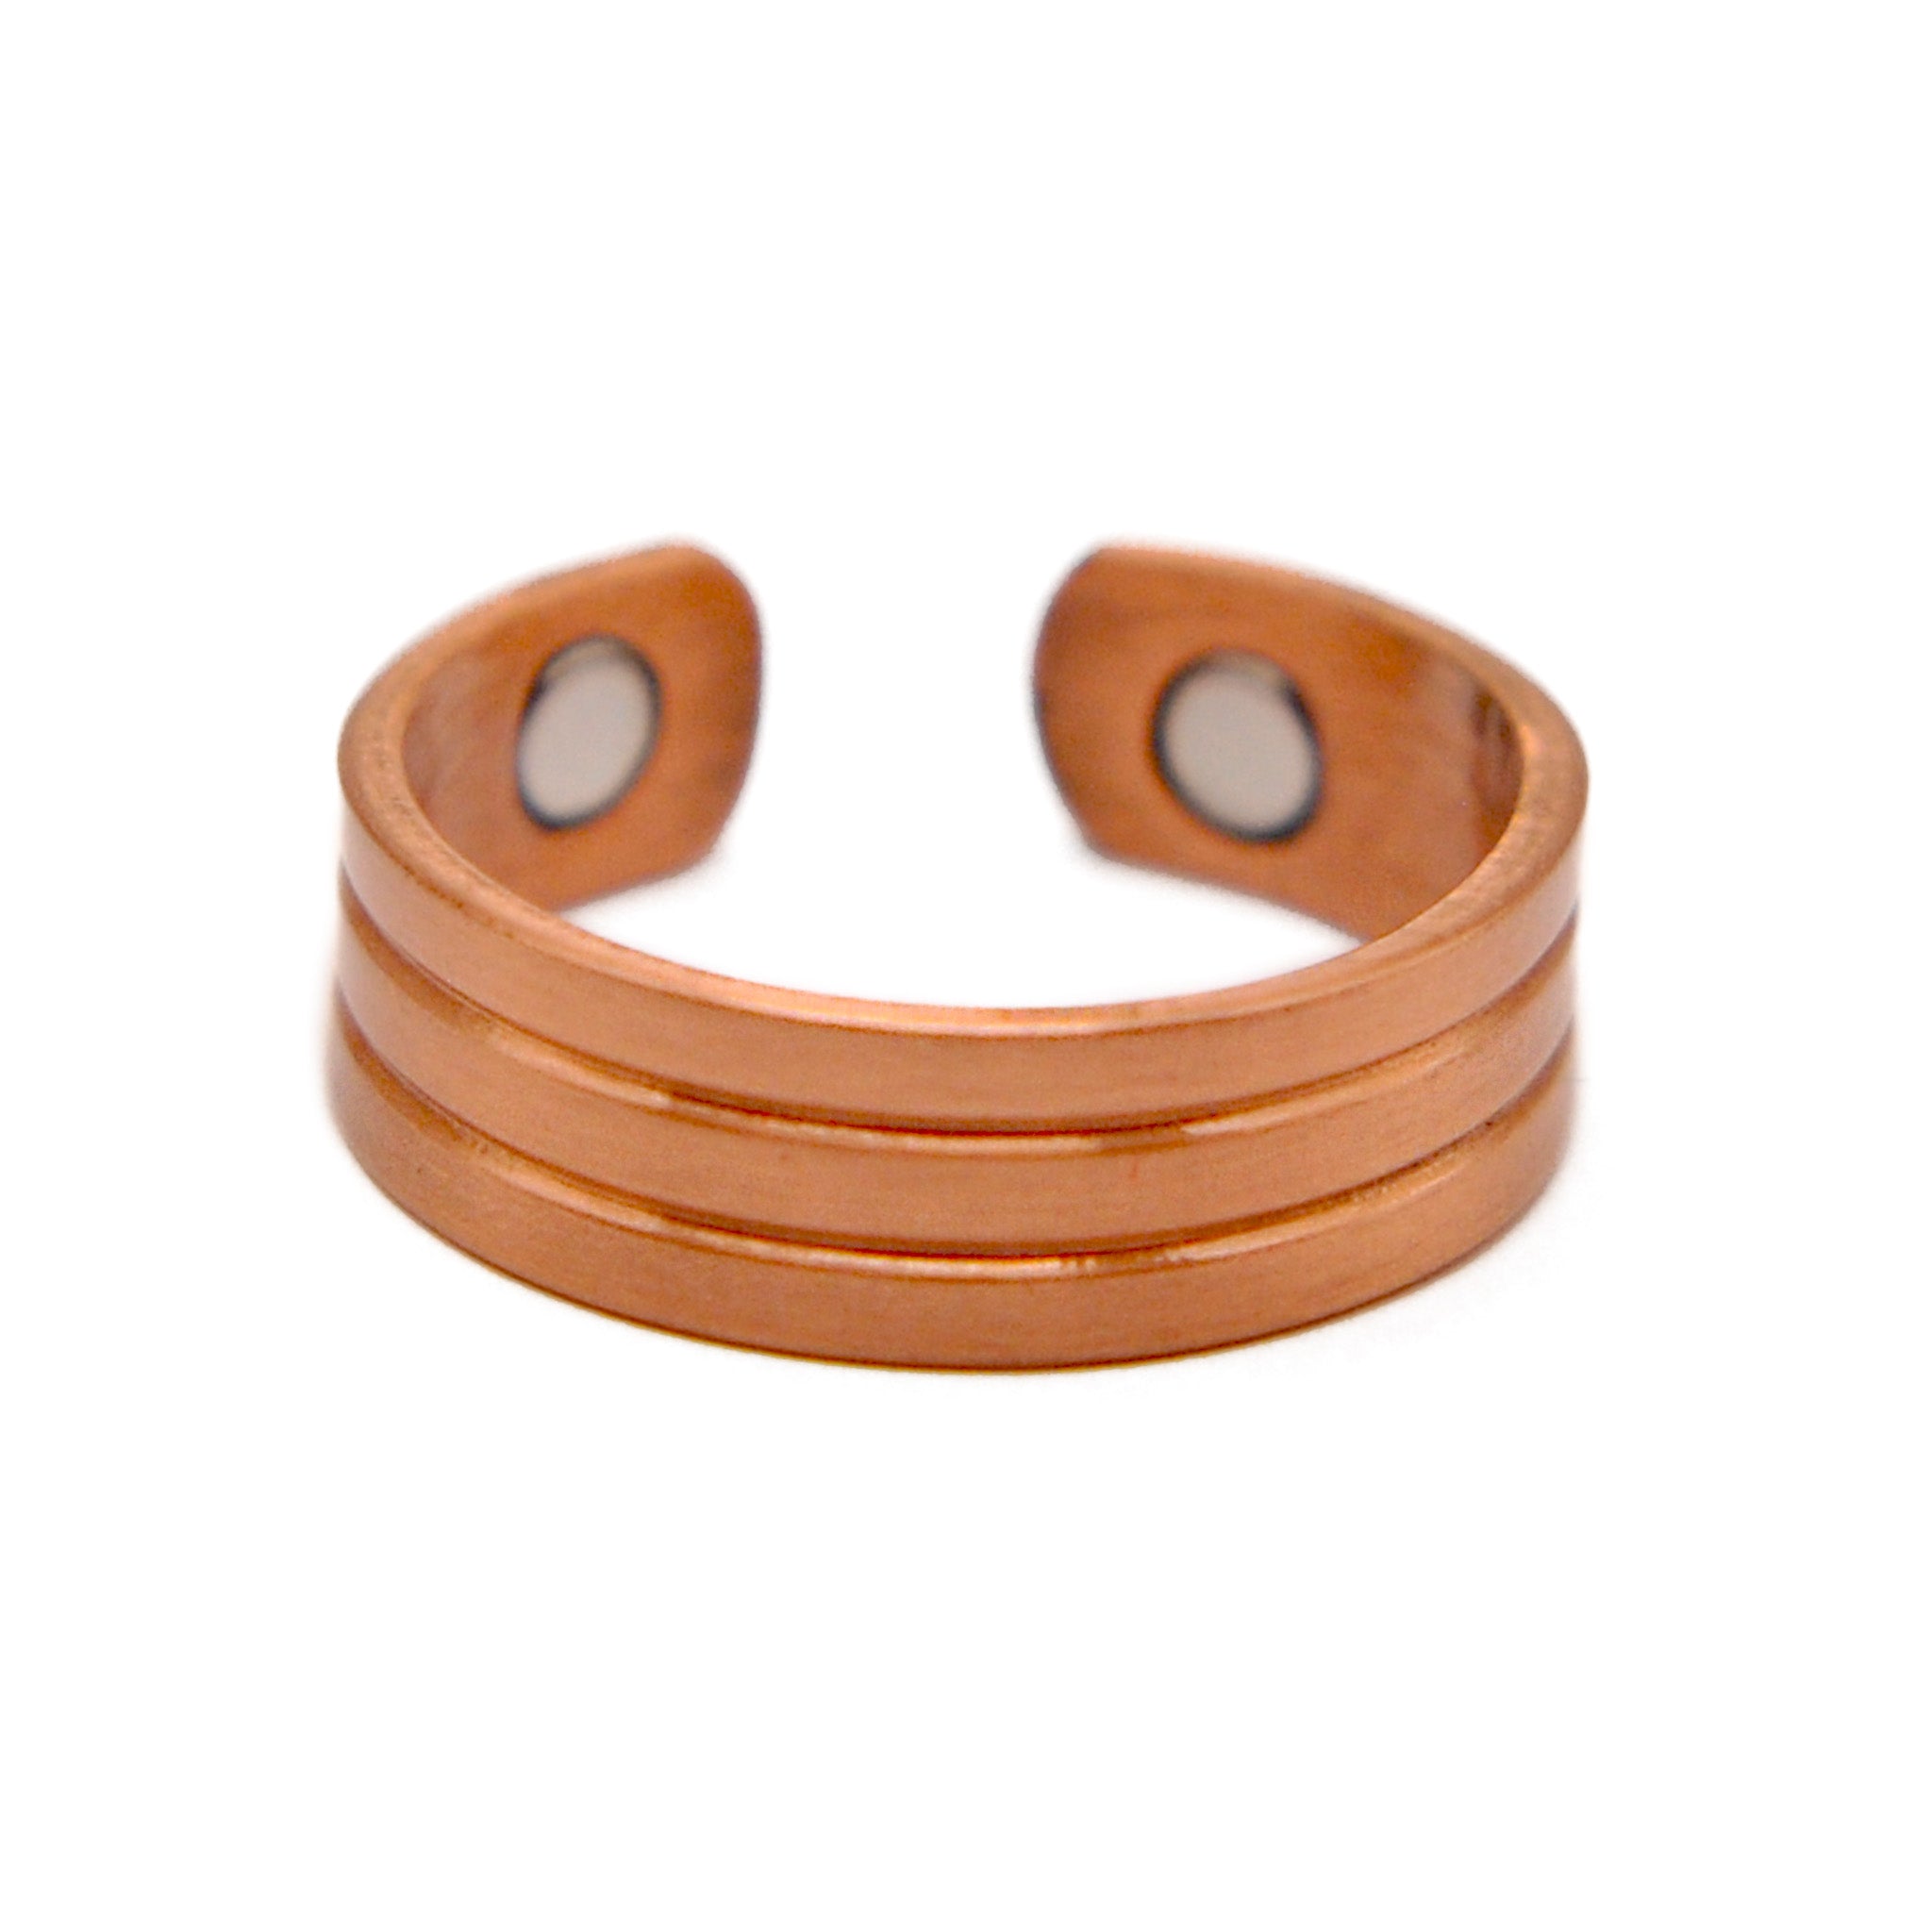 Copper ring